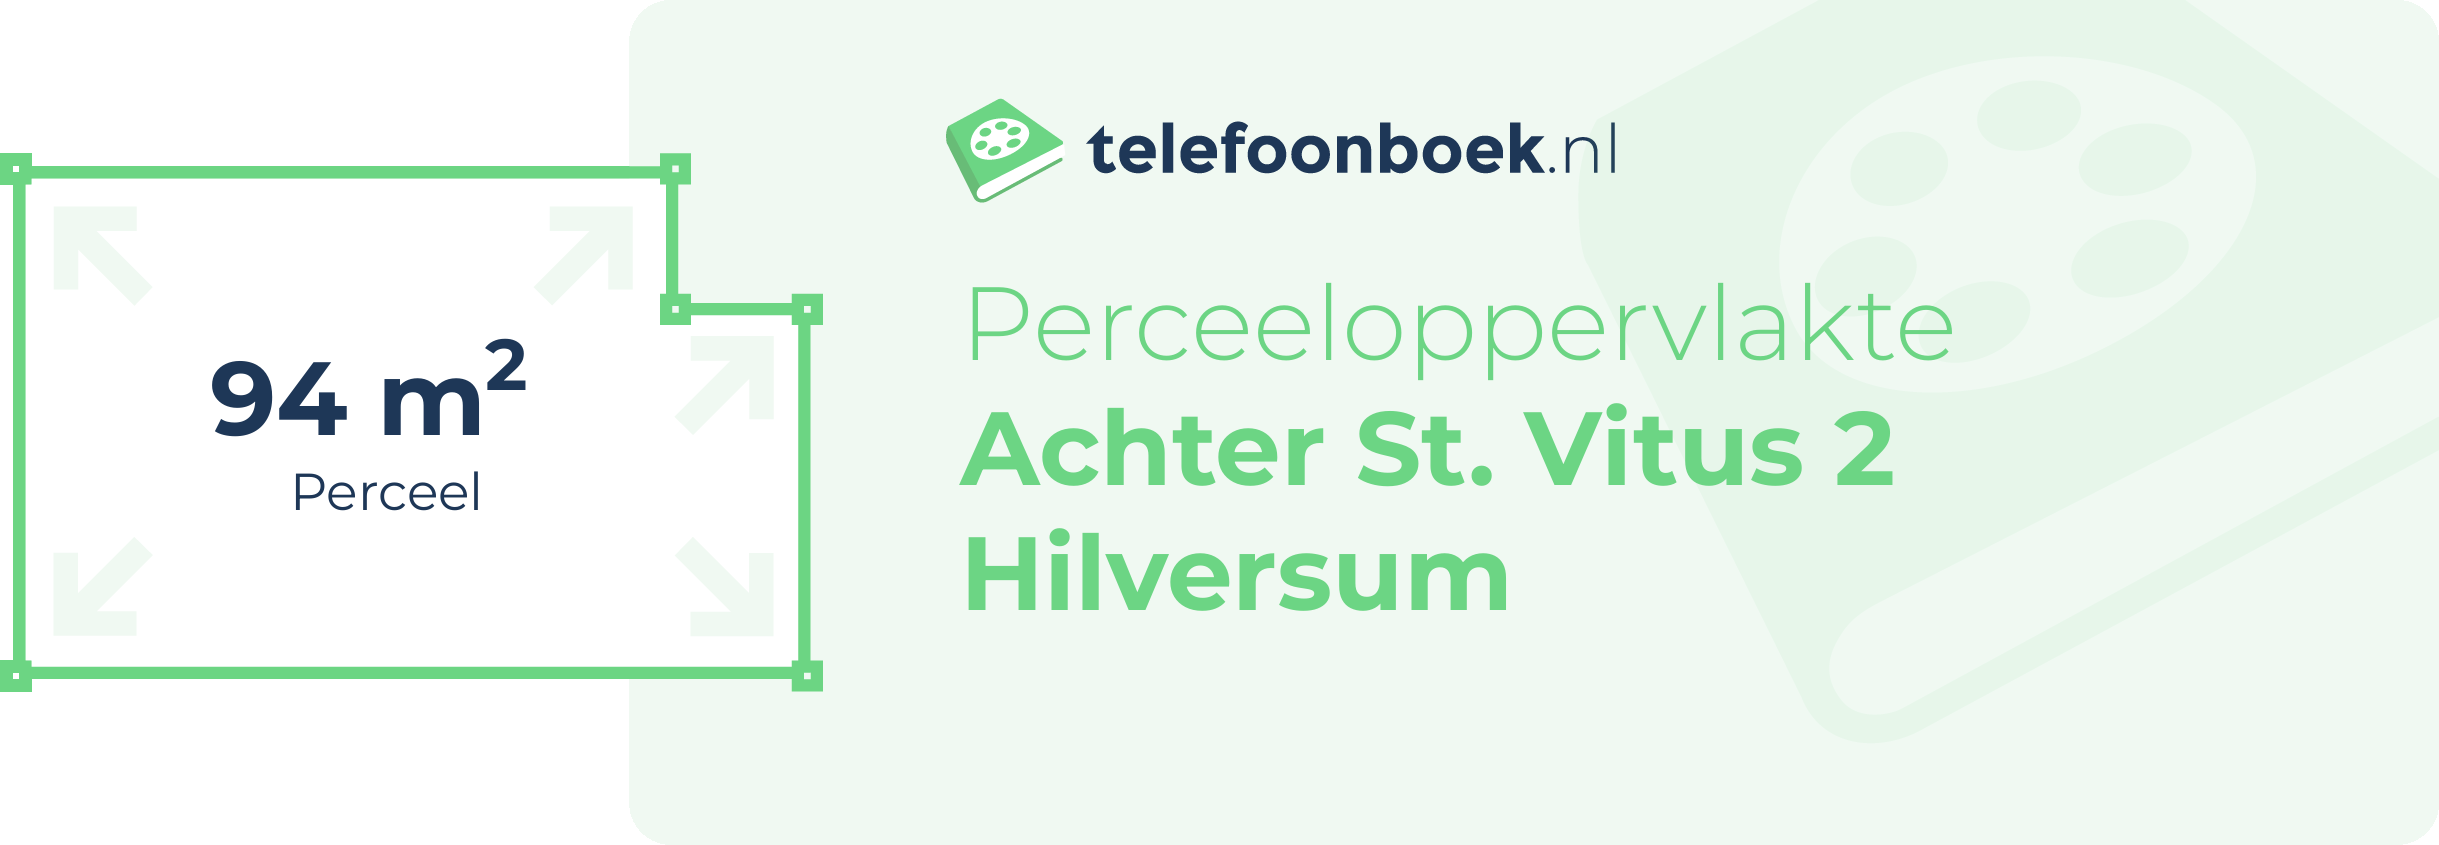 Perceeloppervlakte Achter St. Vitus 2 Hilversum